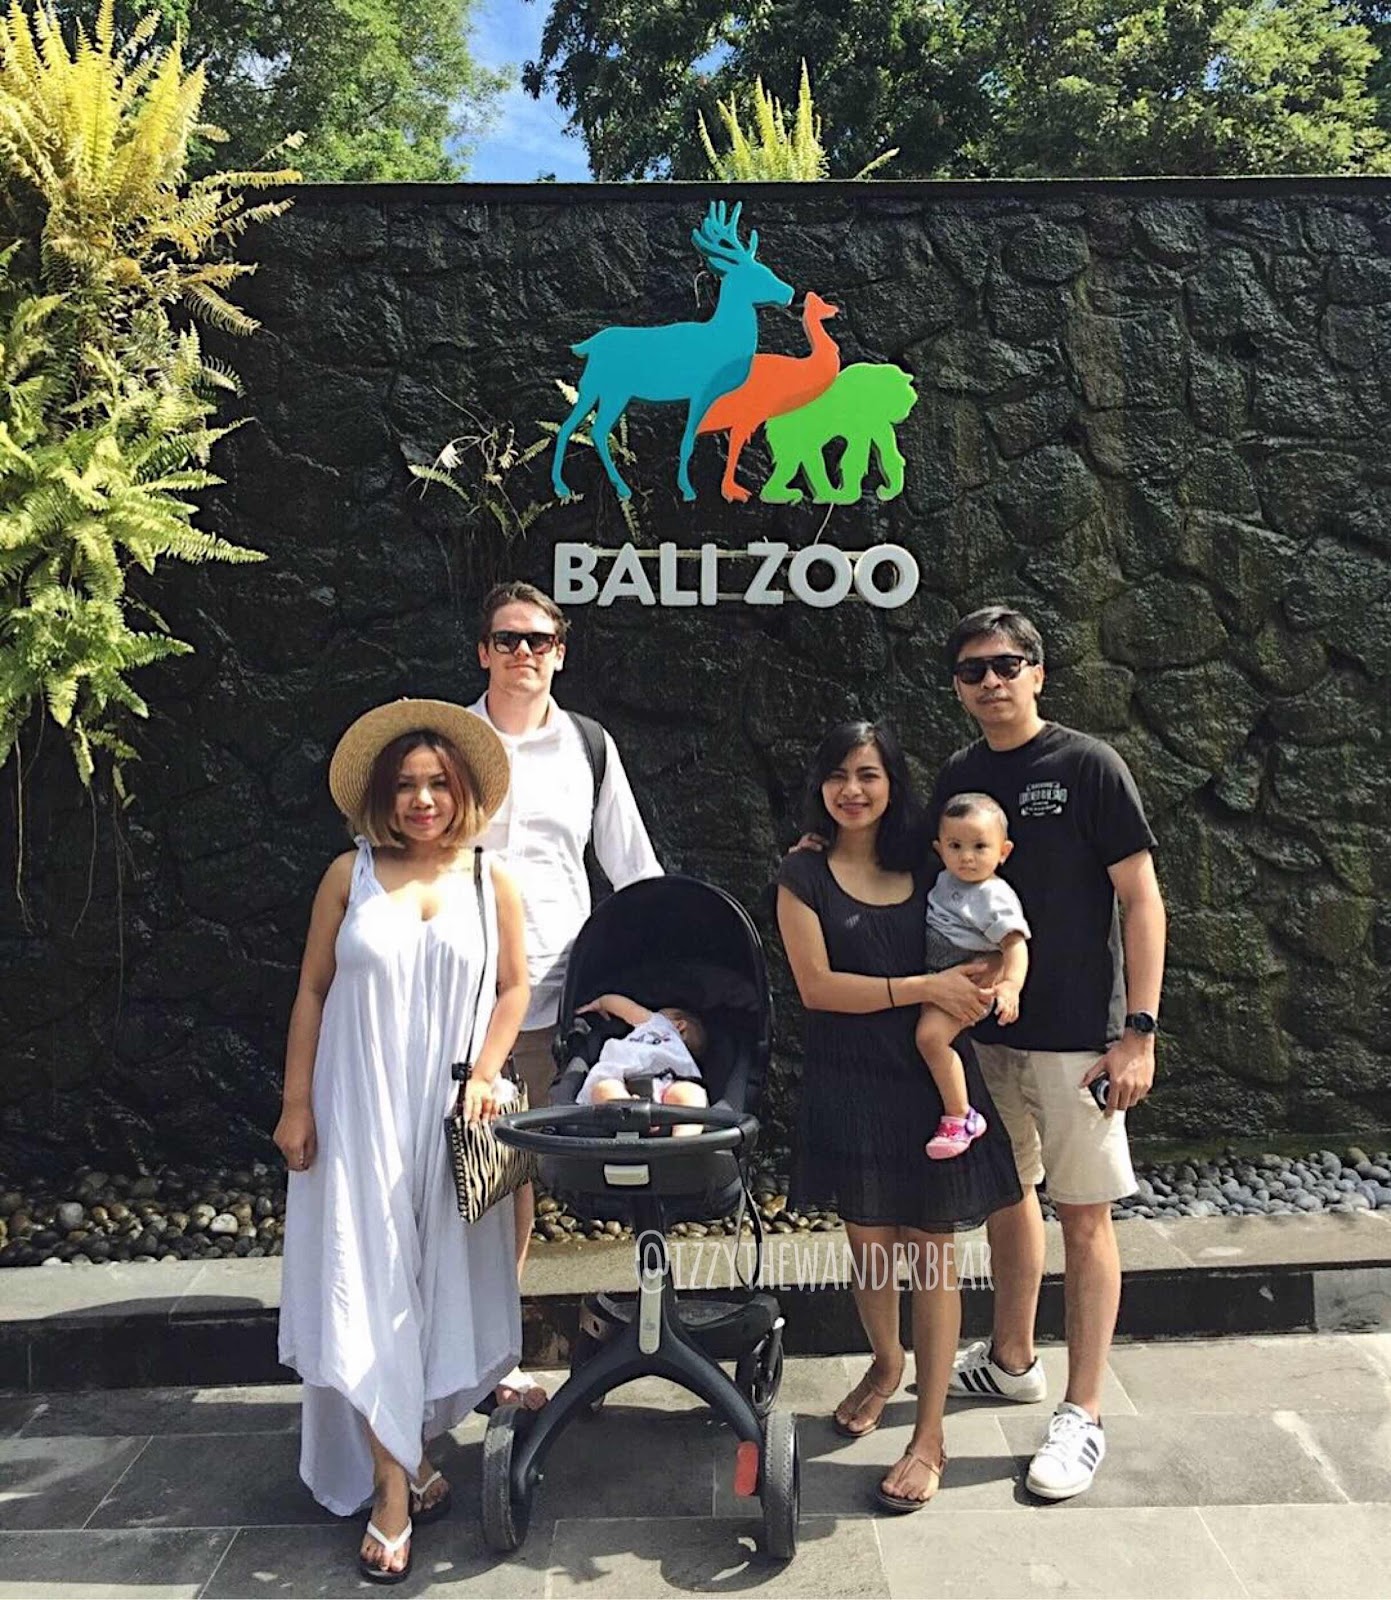 Izzy the Wander Bear - Bali Zoo